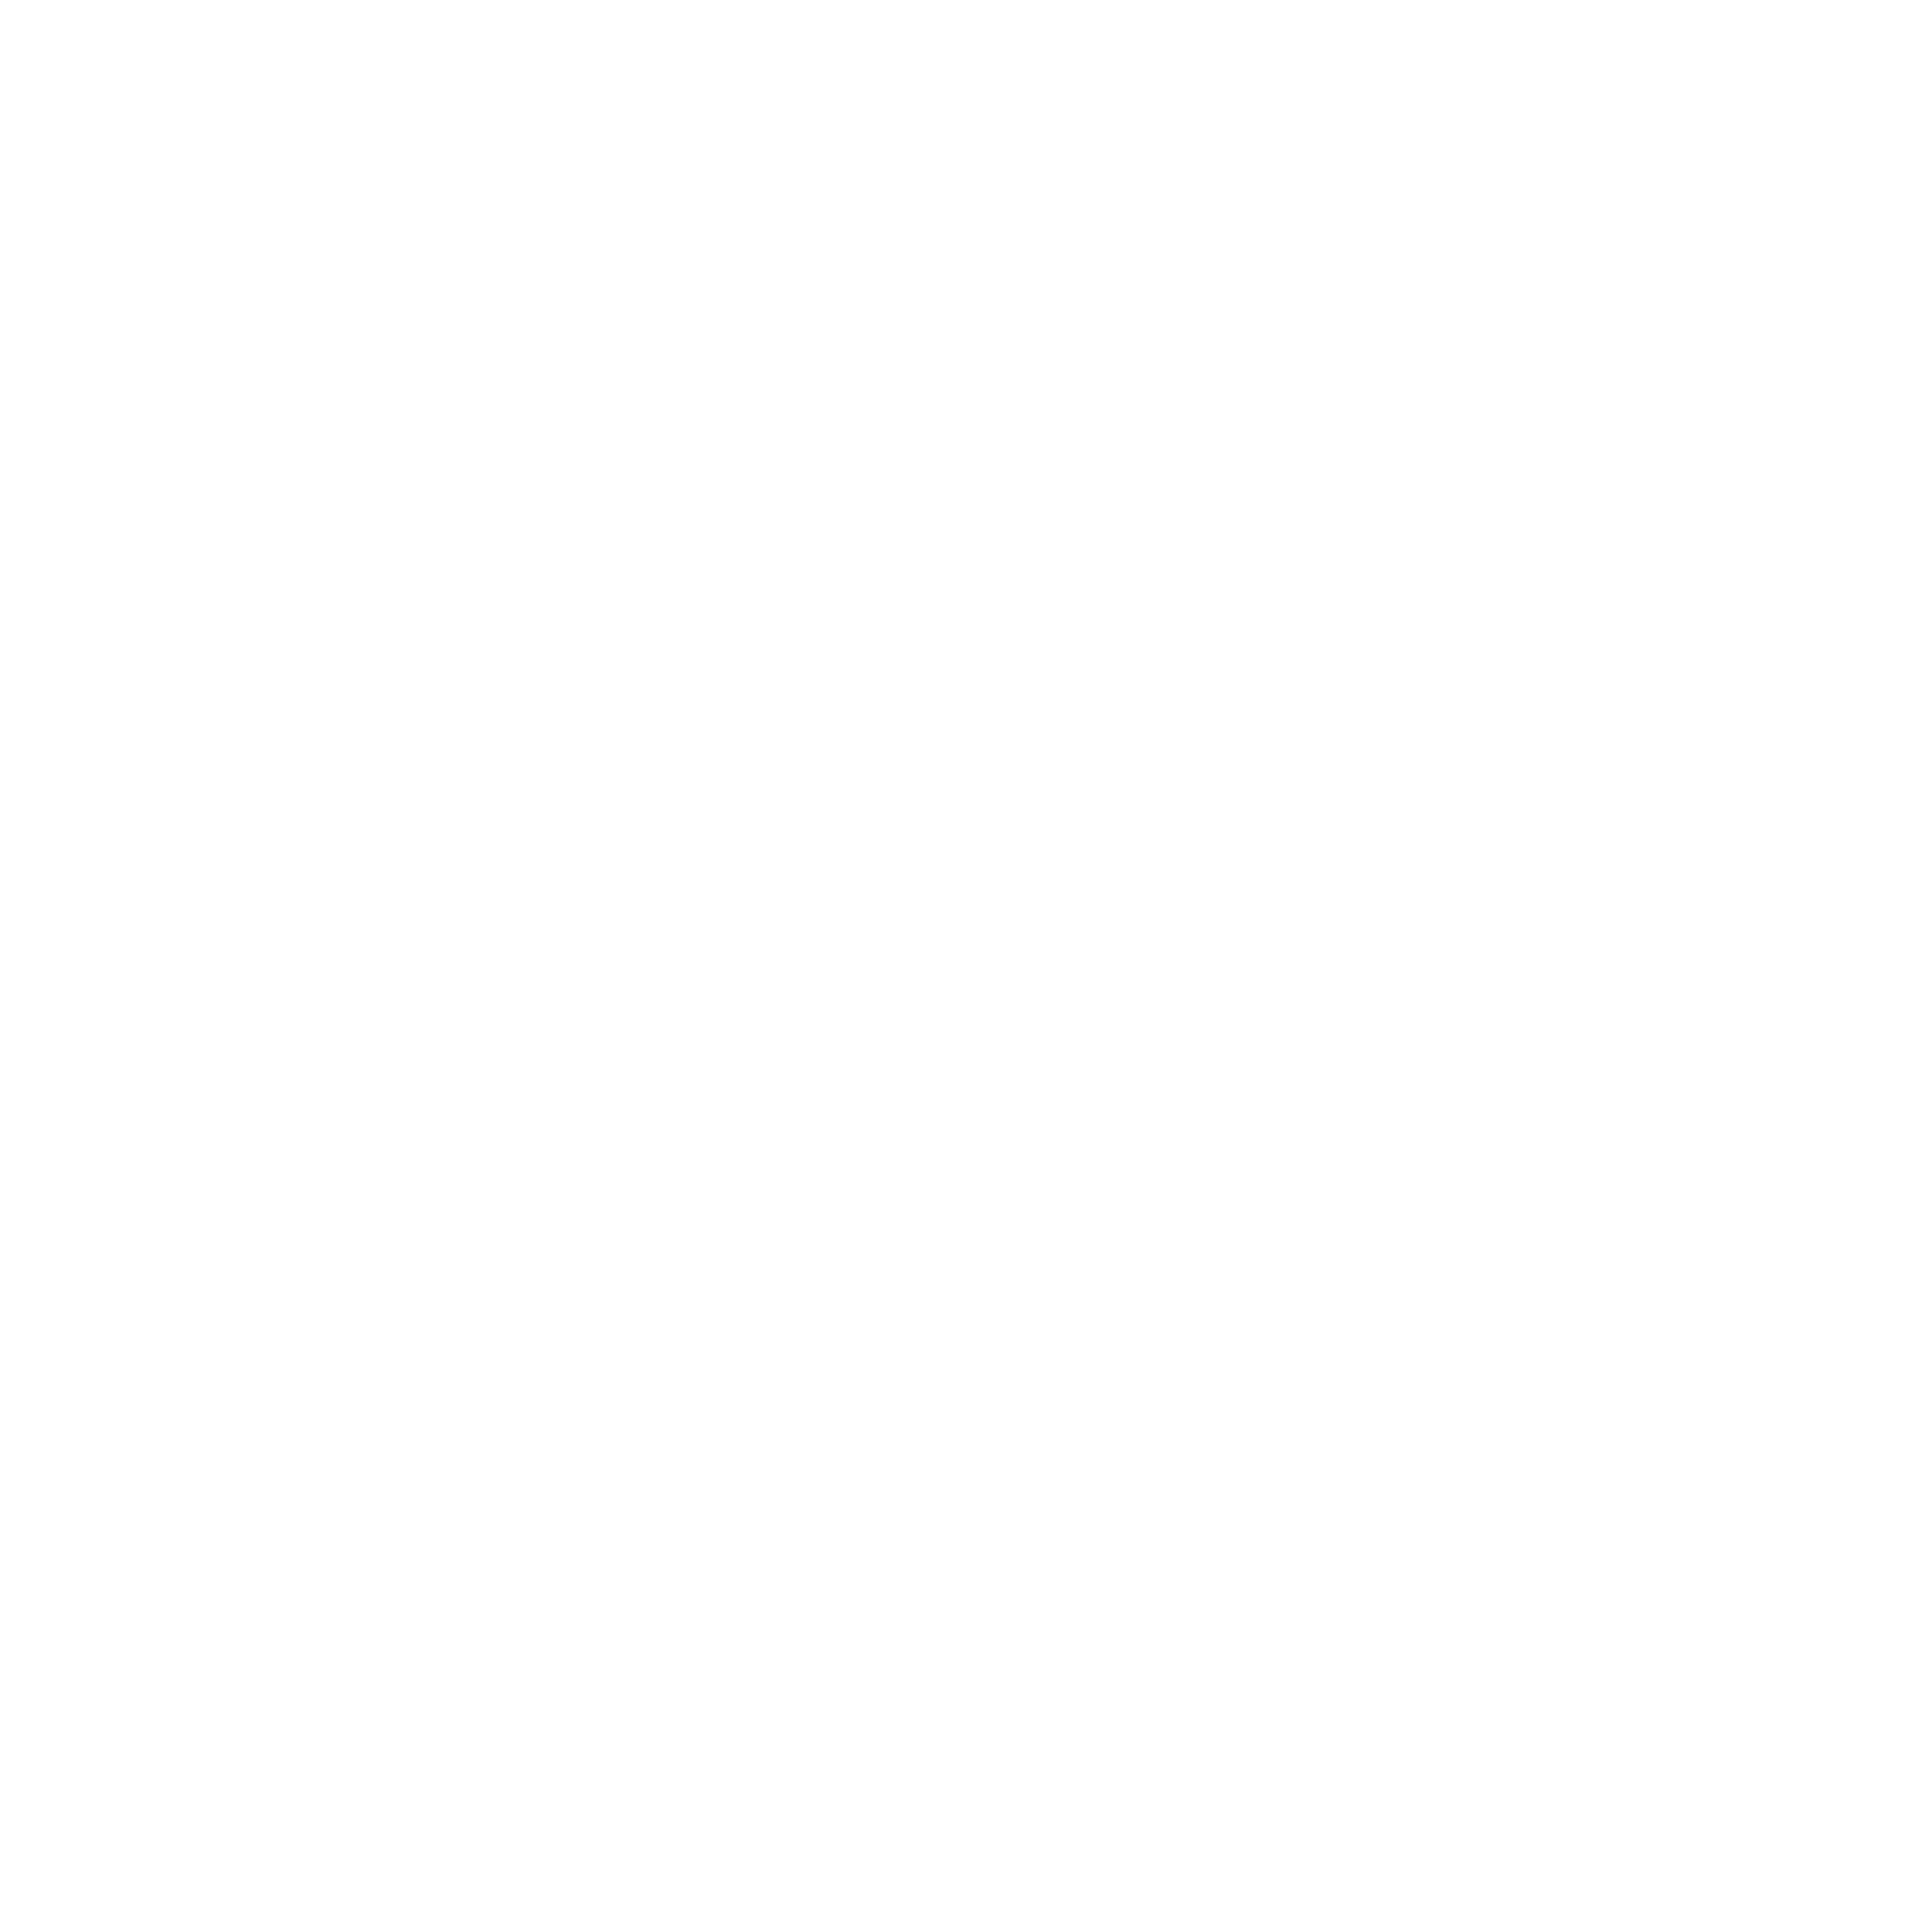 Brussels Airlines Logo - SN Brussels Airlines Logo PNG Transparent & SVG Vector - Freebie Supply